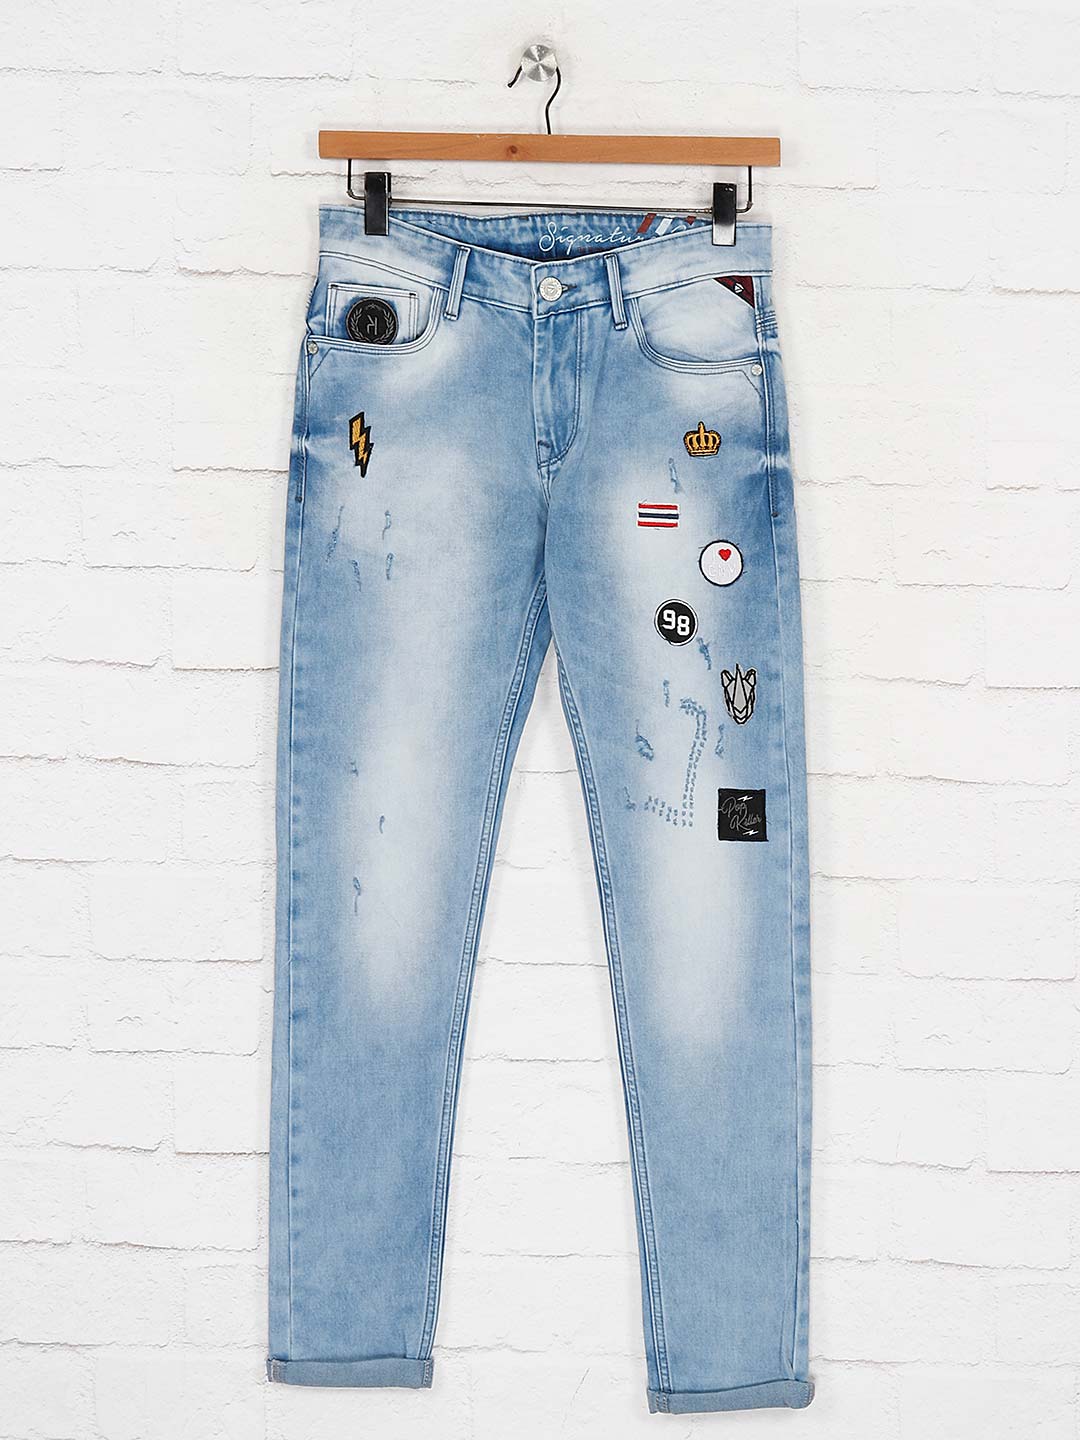 kozzak jeans online